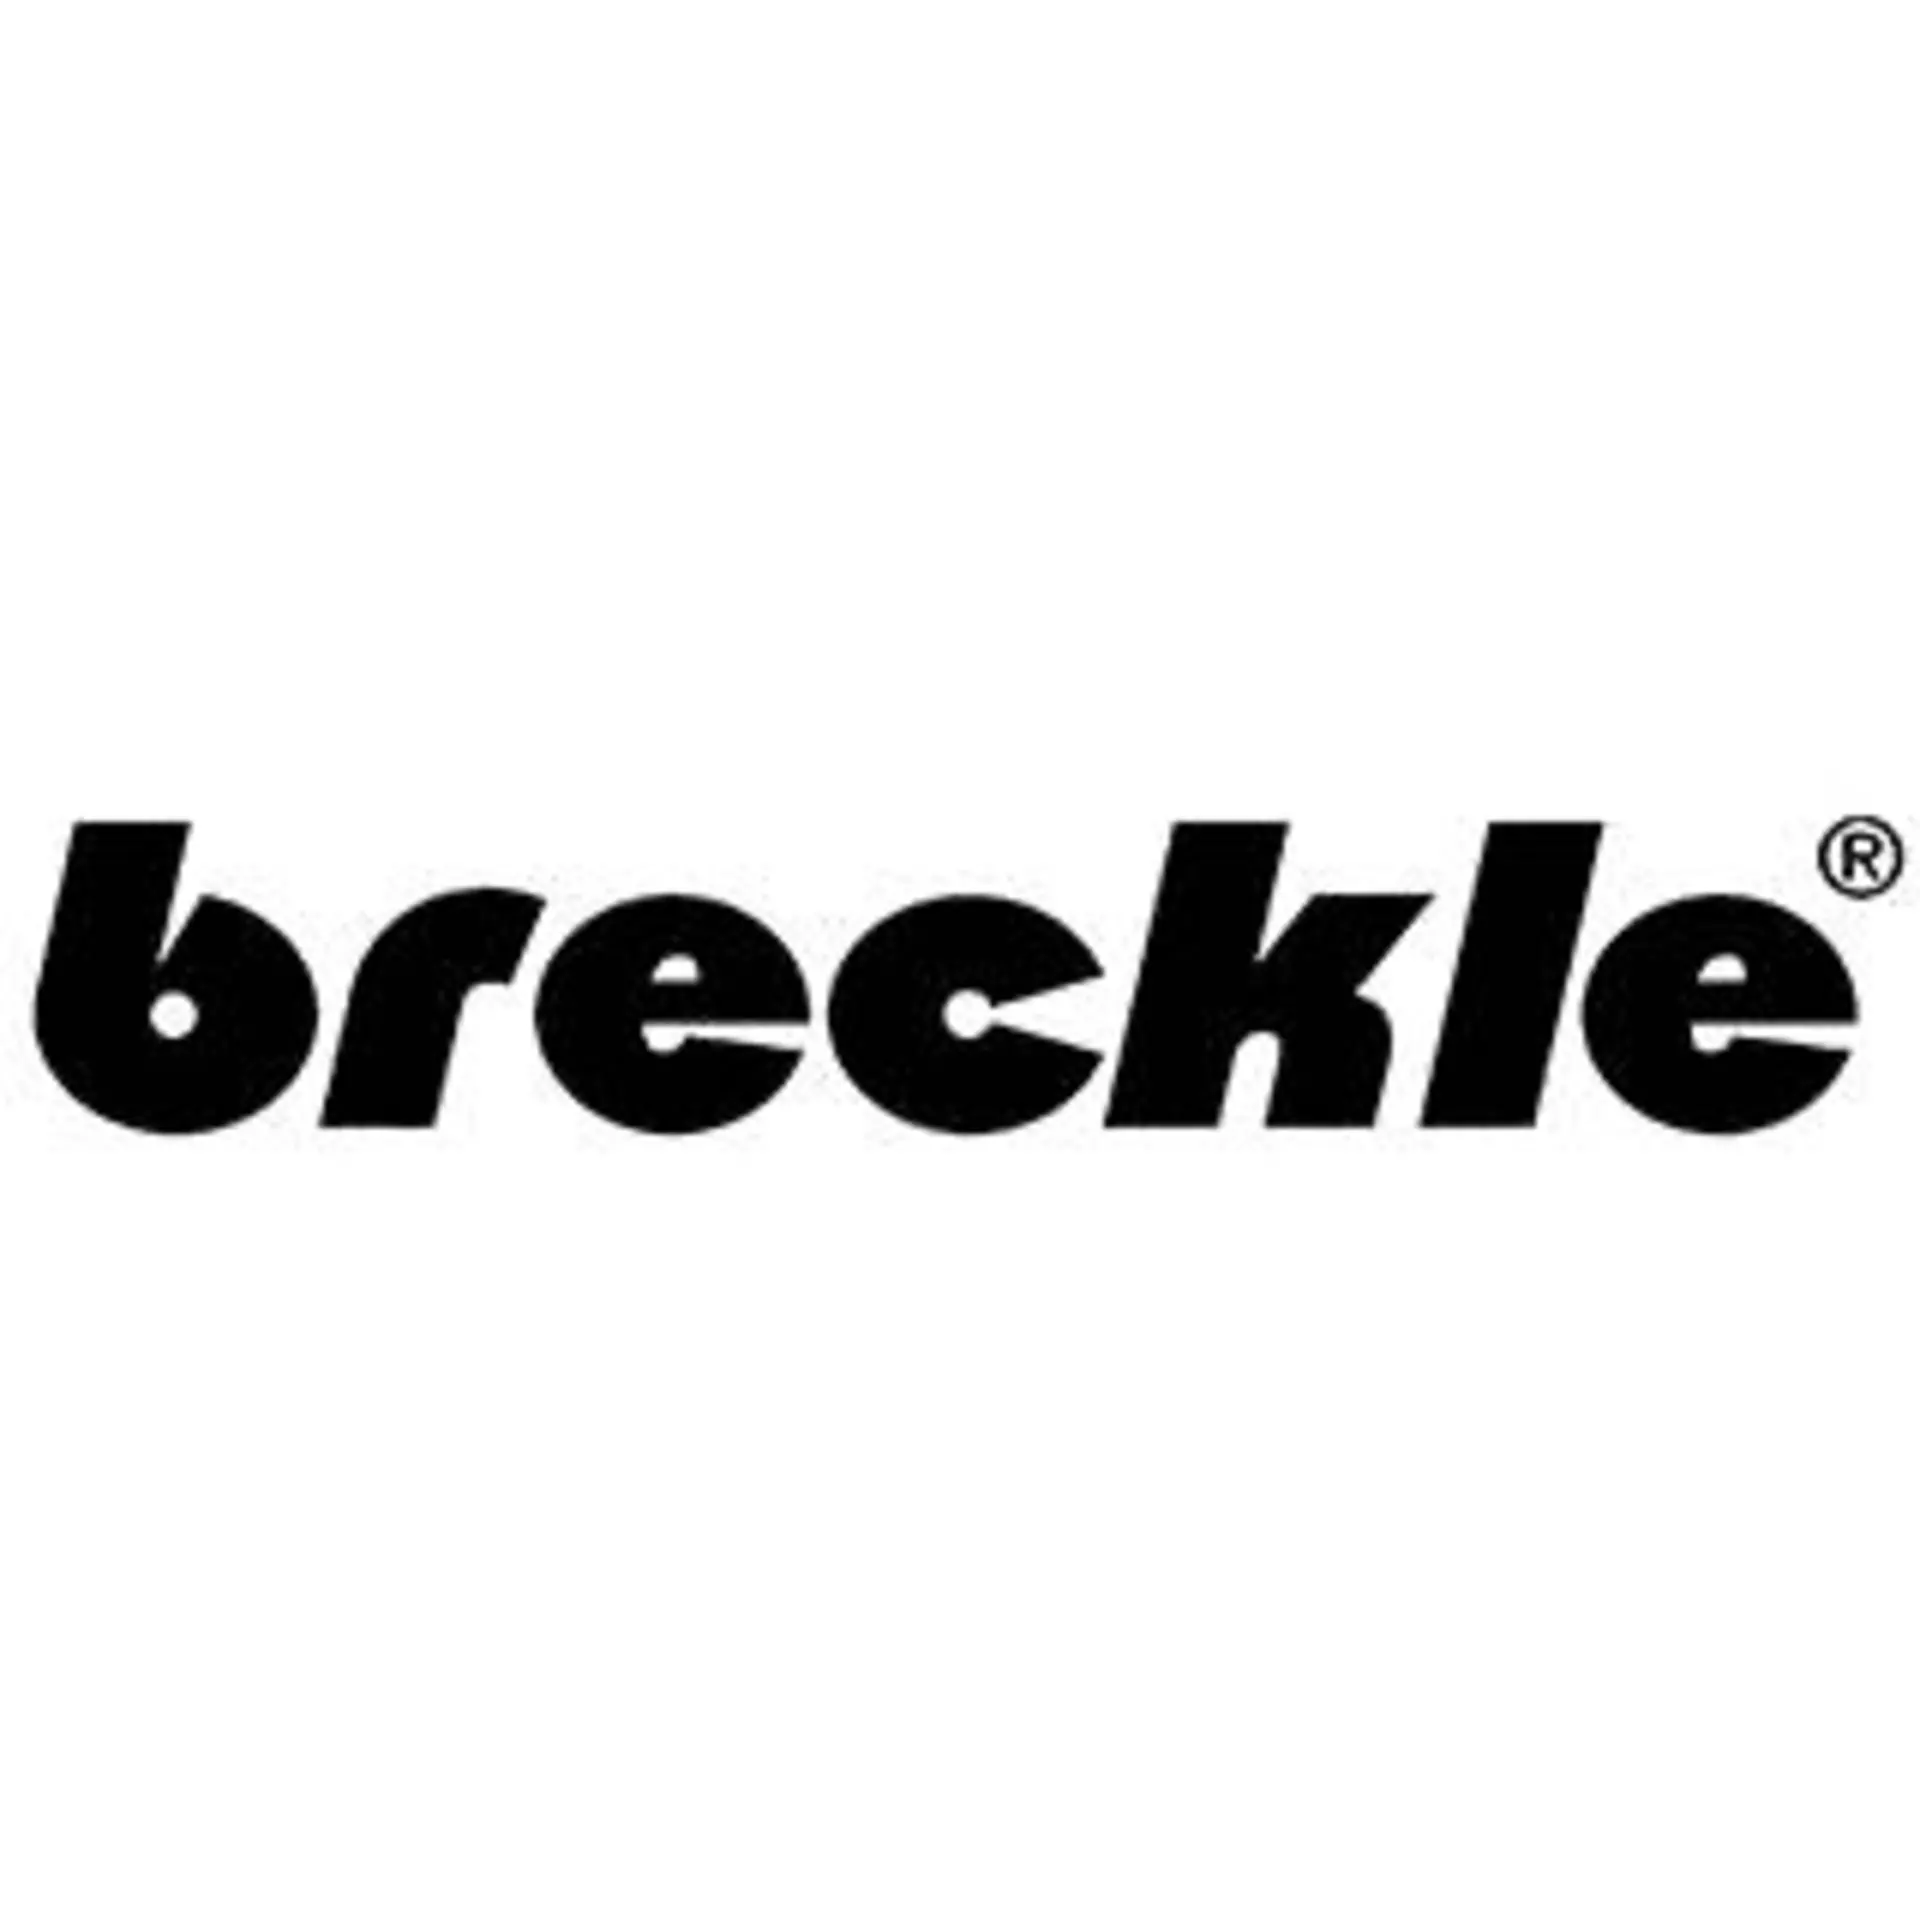 Breckle